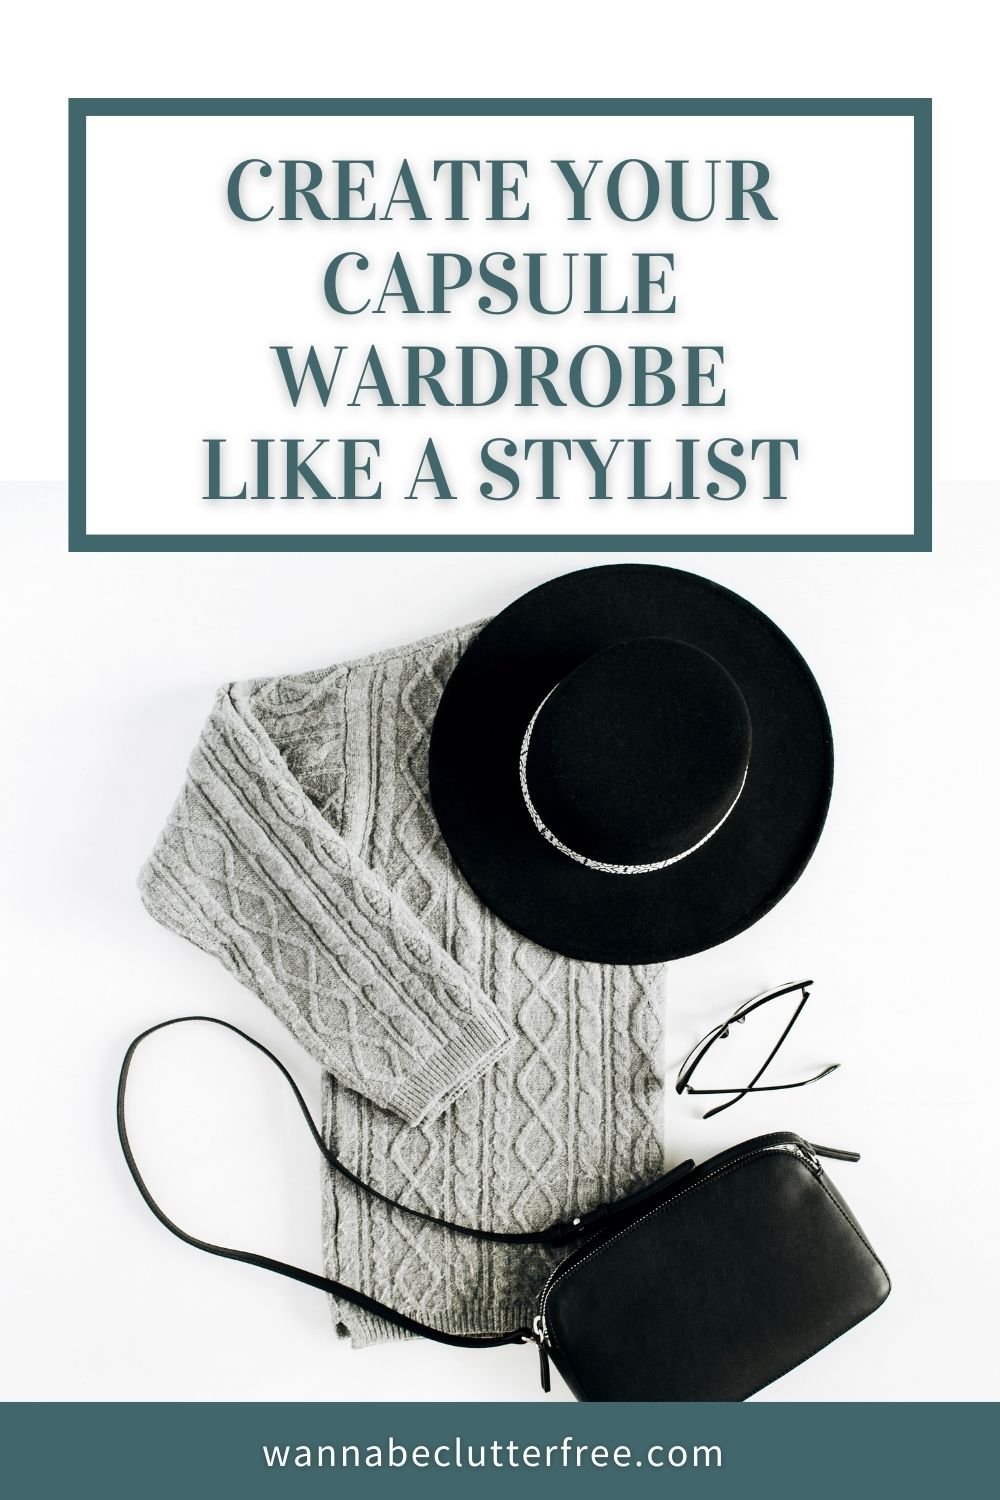 Create your capsule wardrobe like a stylist